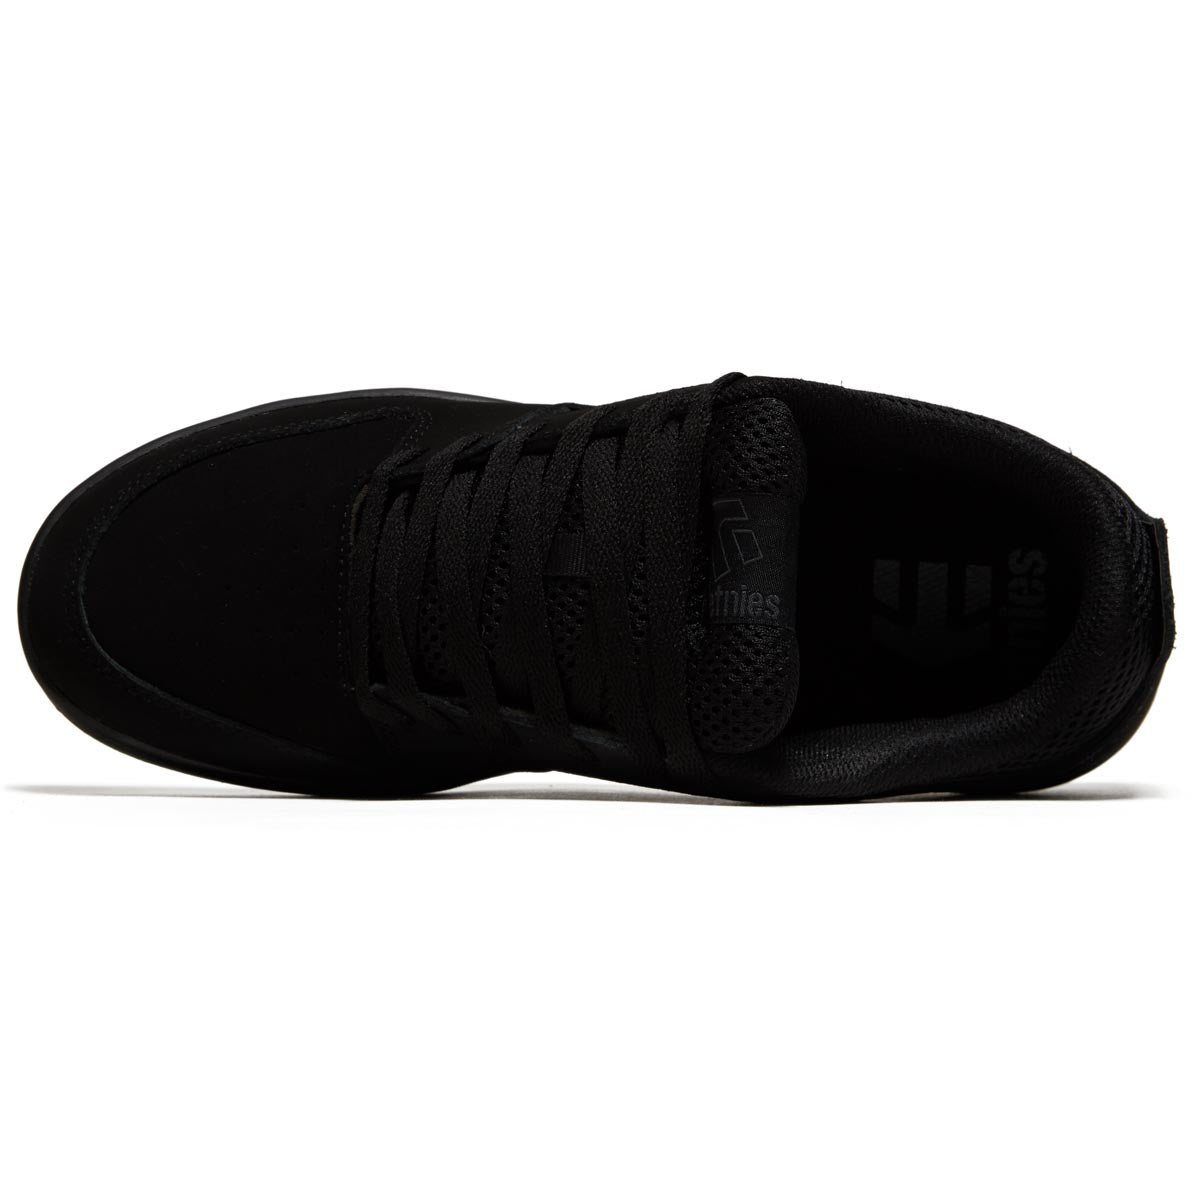 Etnies Verano Shoes - Black image 3